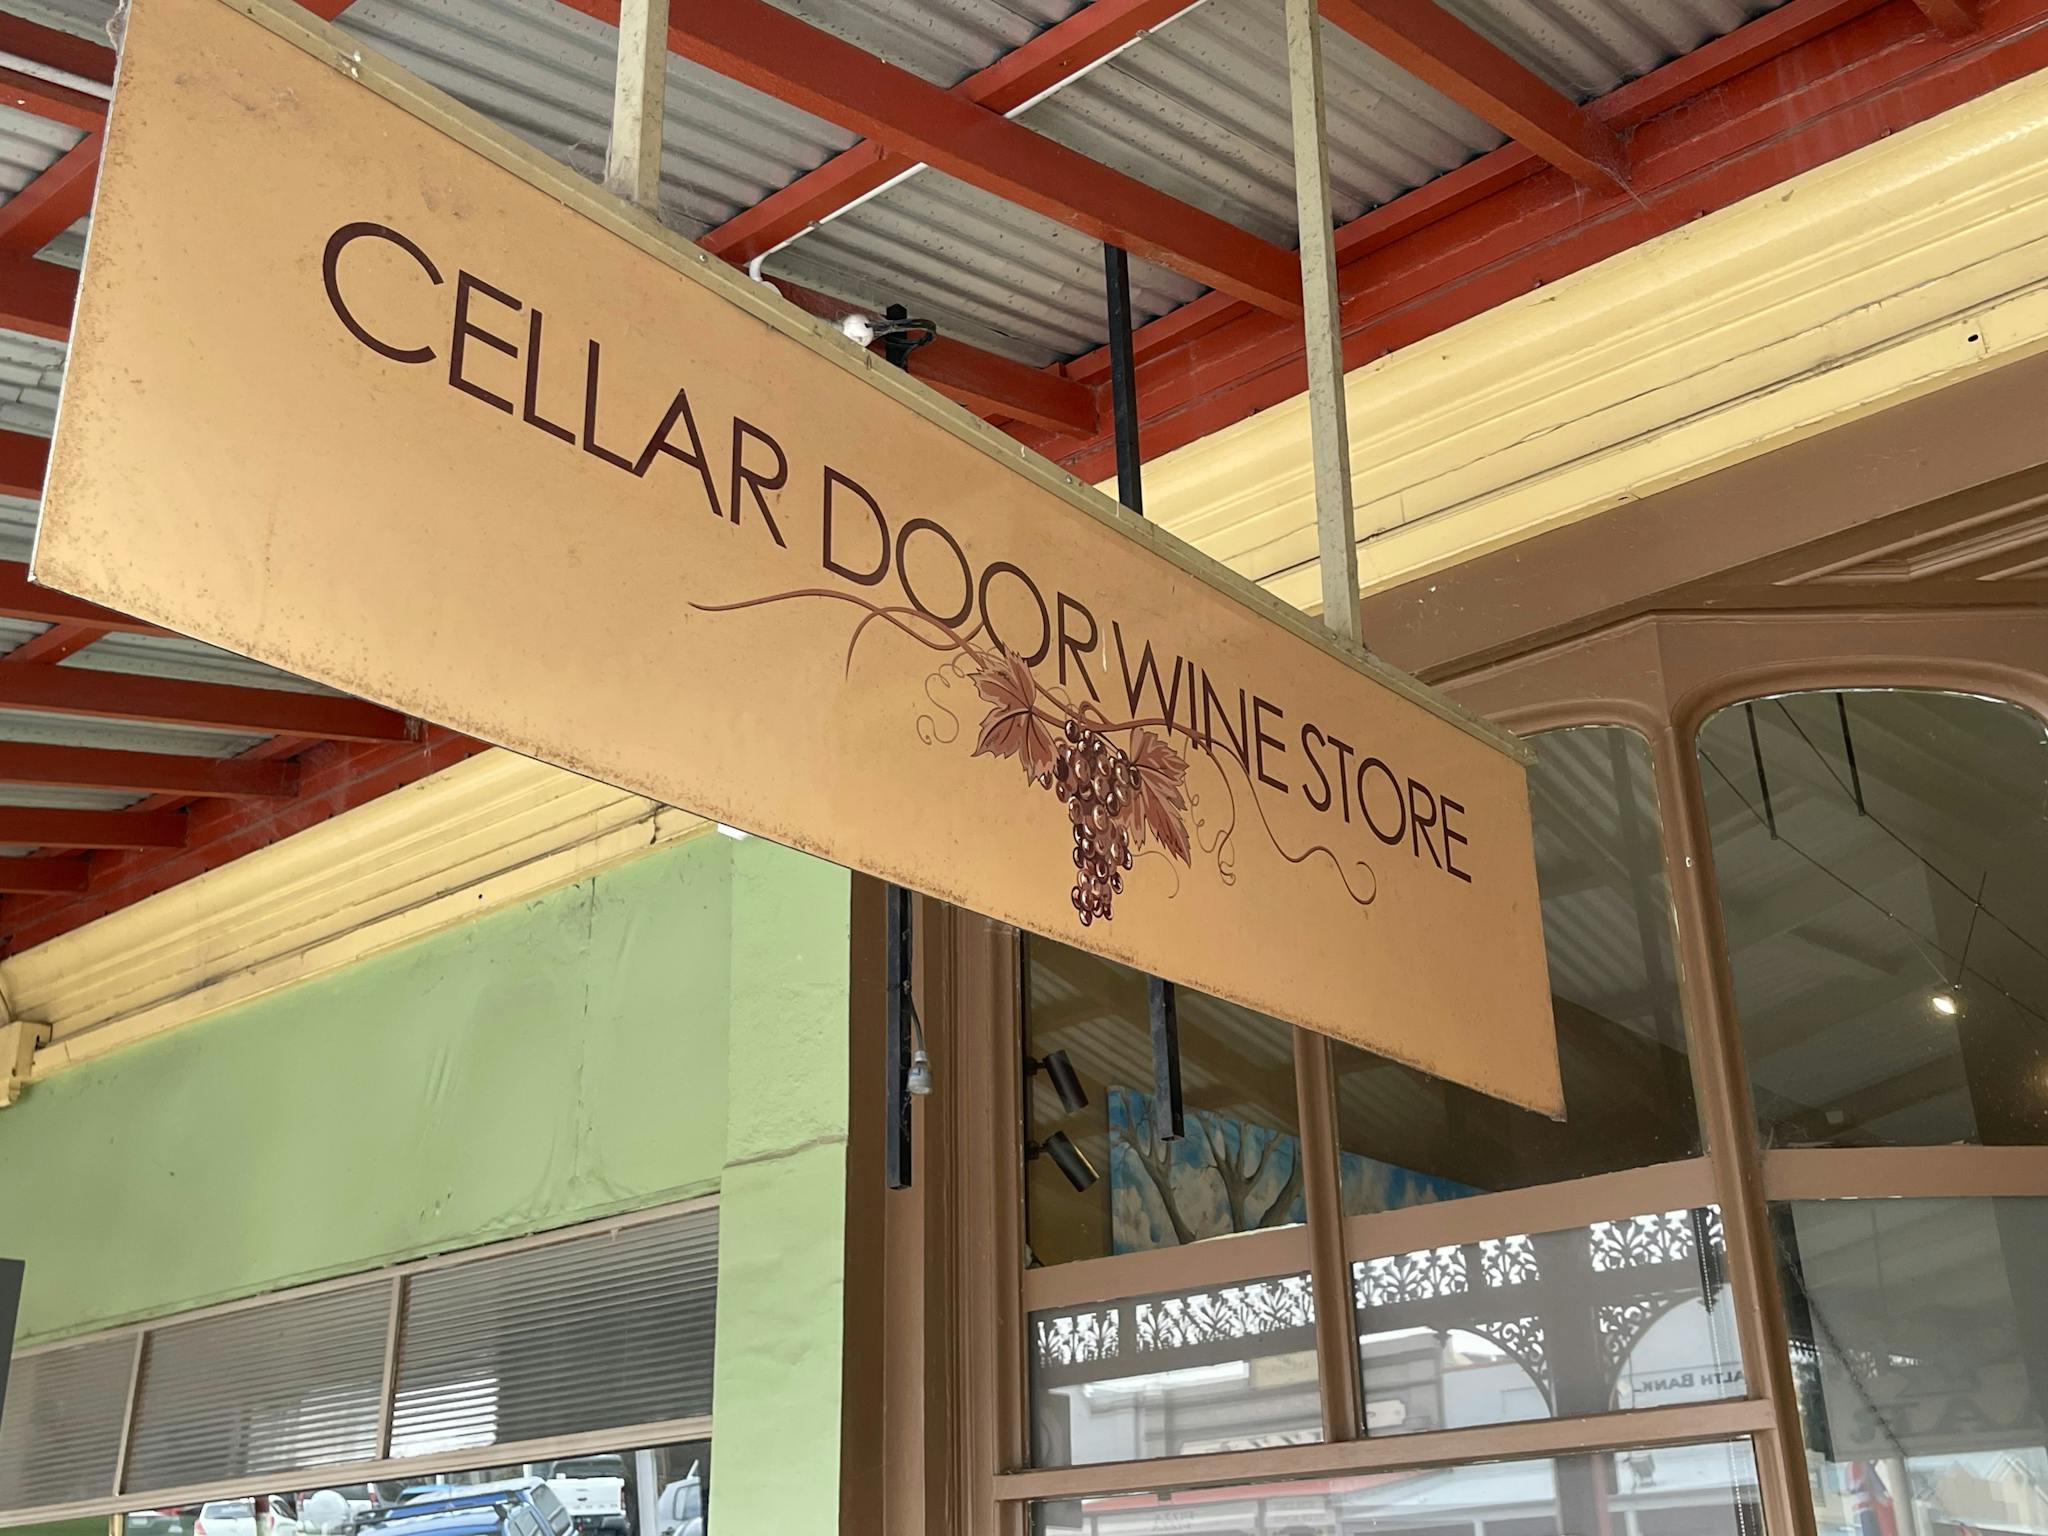 Cellar Door Wine Store on the main street of Beechworth